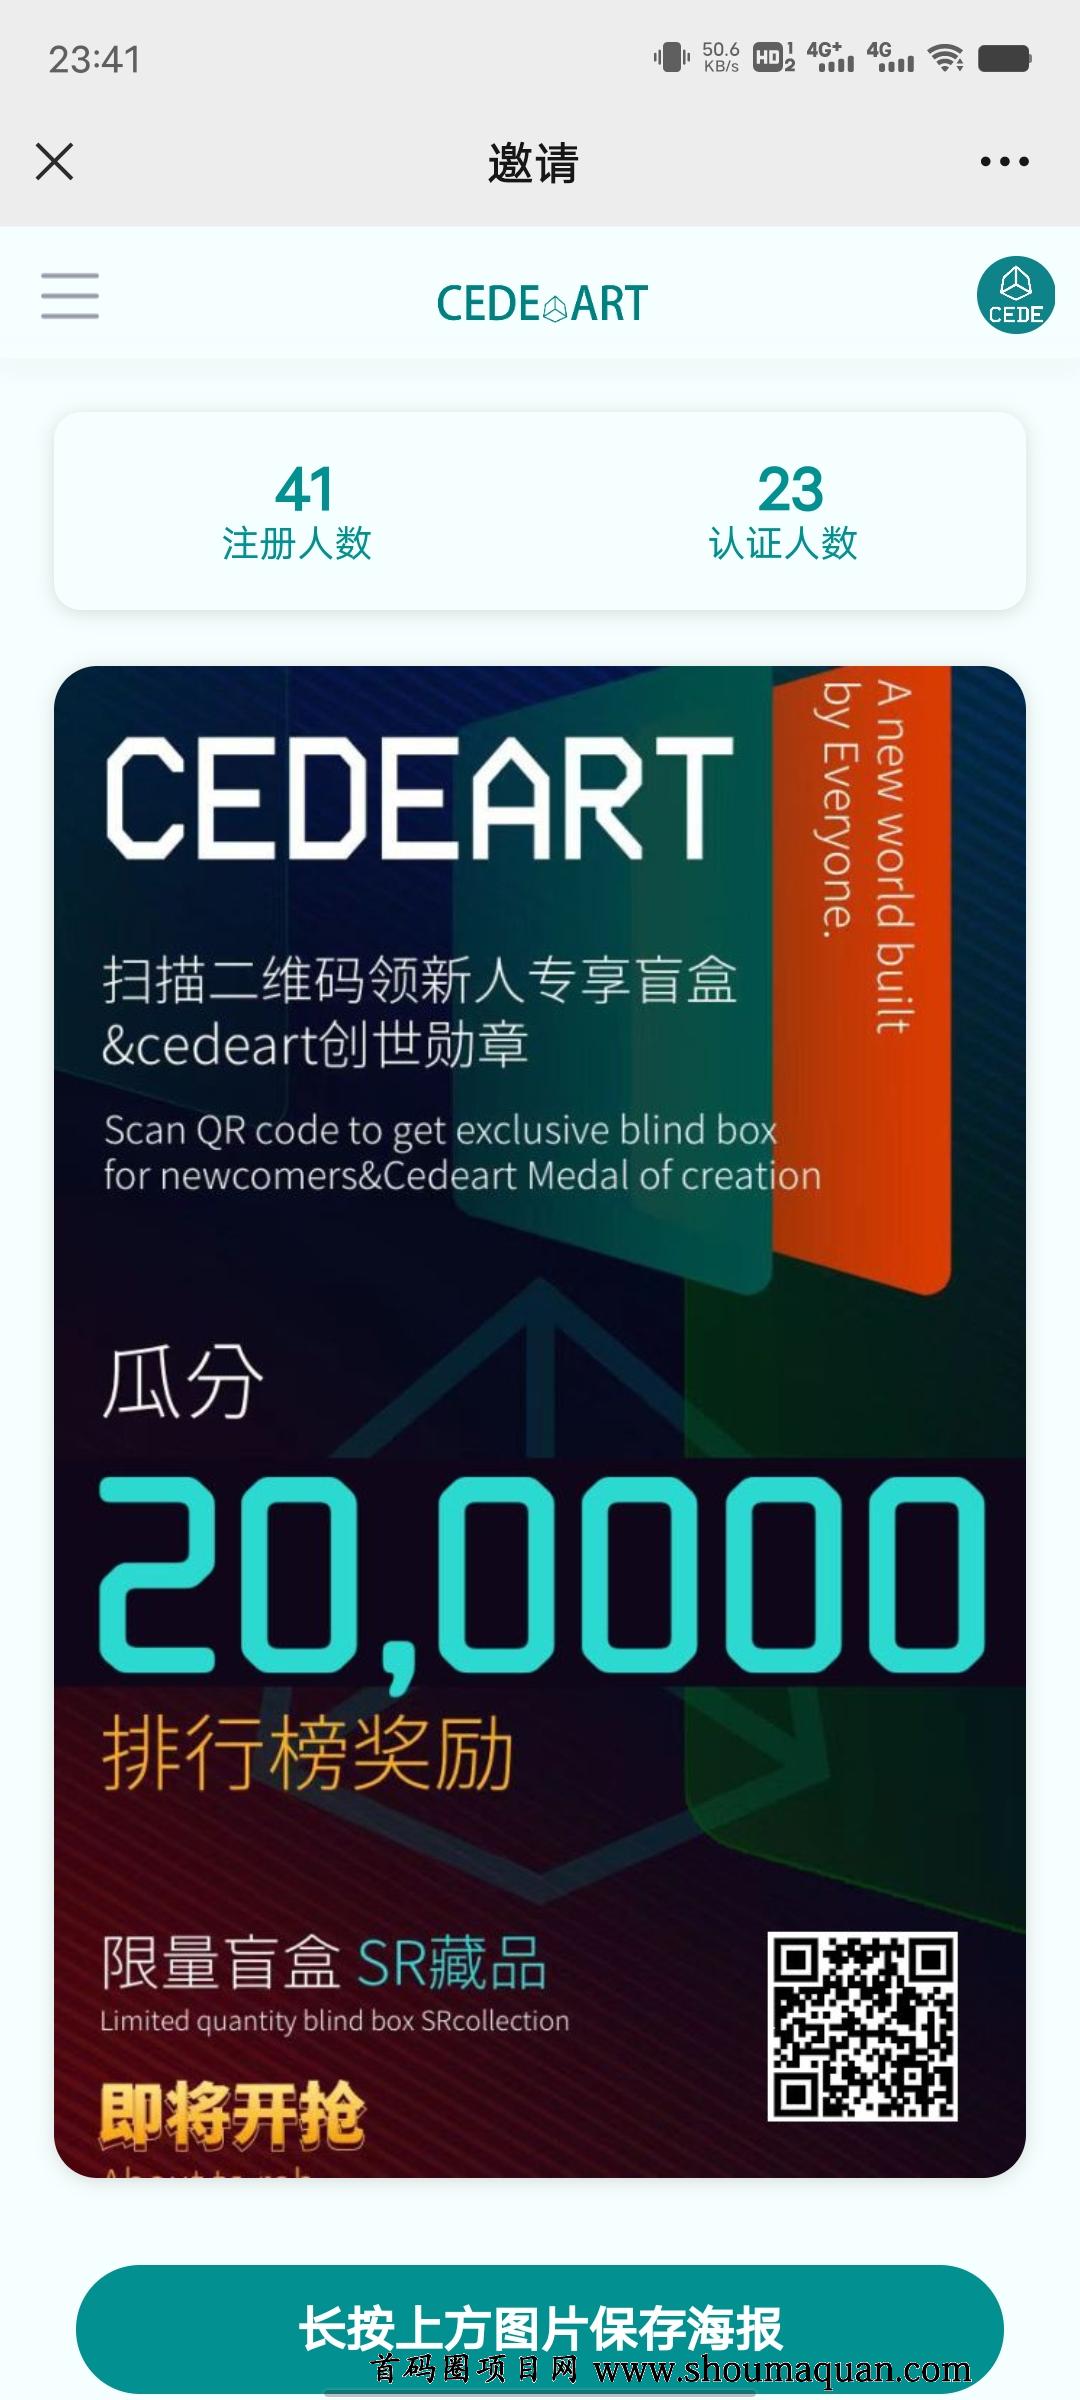 CEDEart ，挺有热度的， 注册SM秒绑卡秒送个徽章